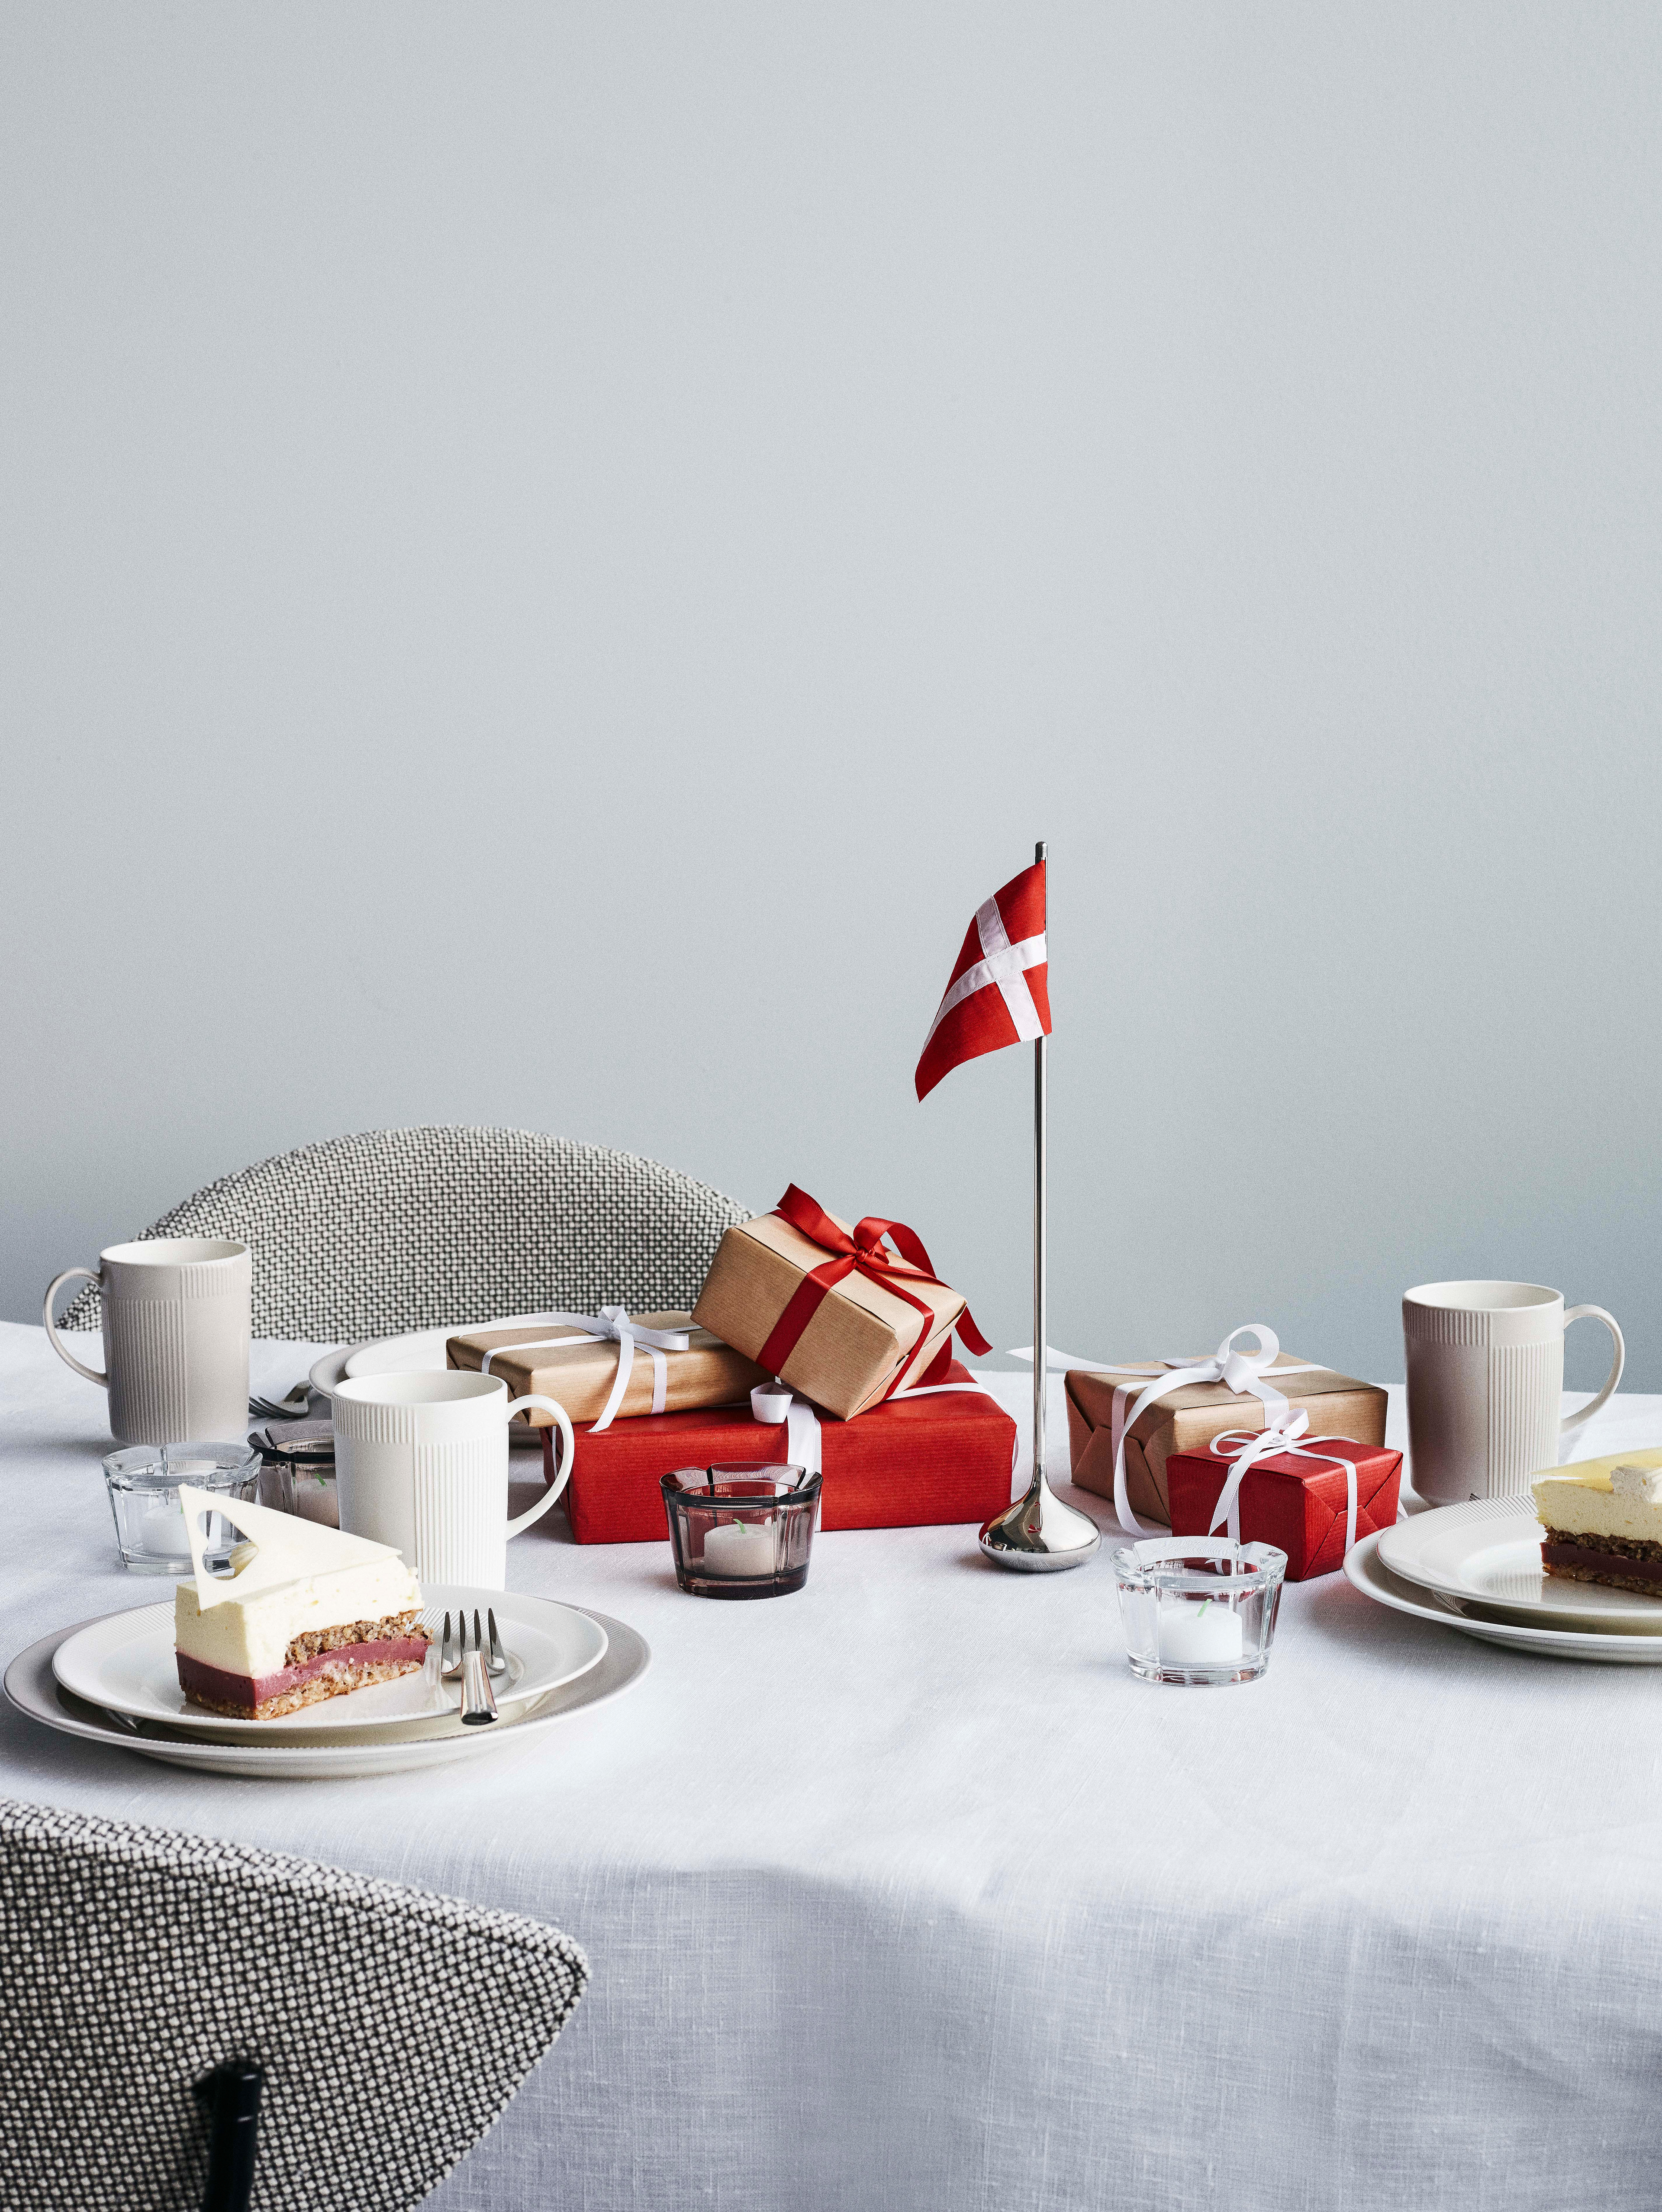 Fødselsdagsbord med dansk bordflag, gaver og kage